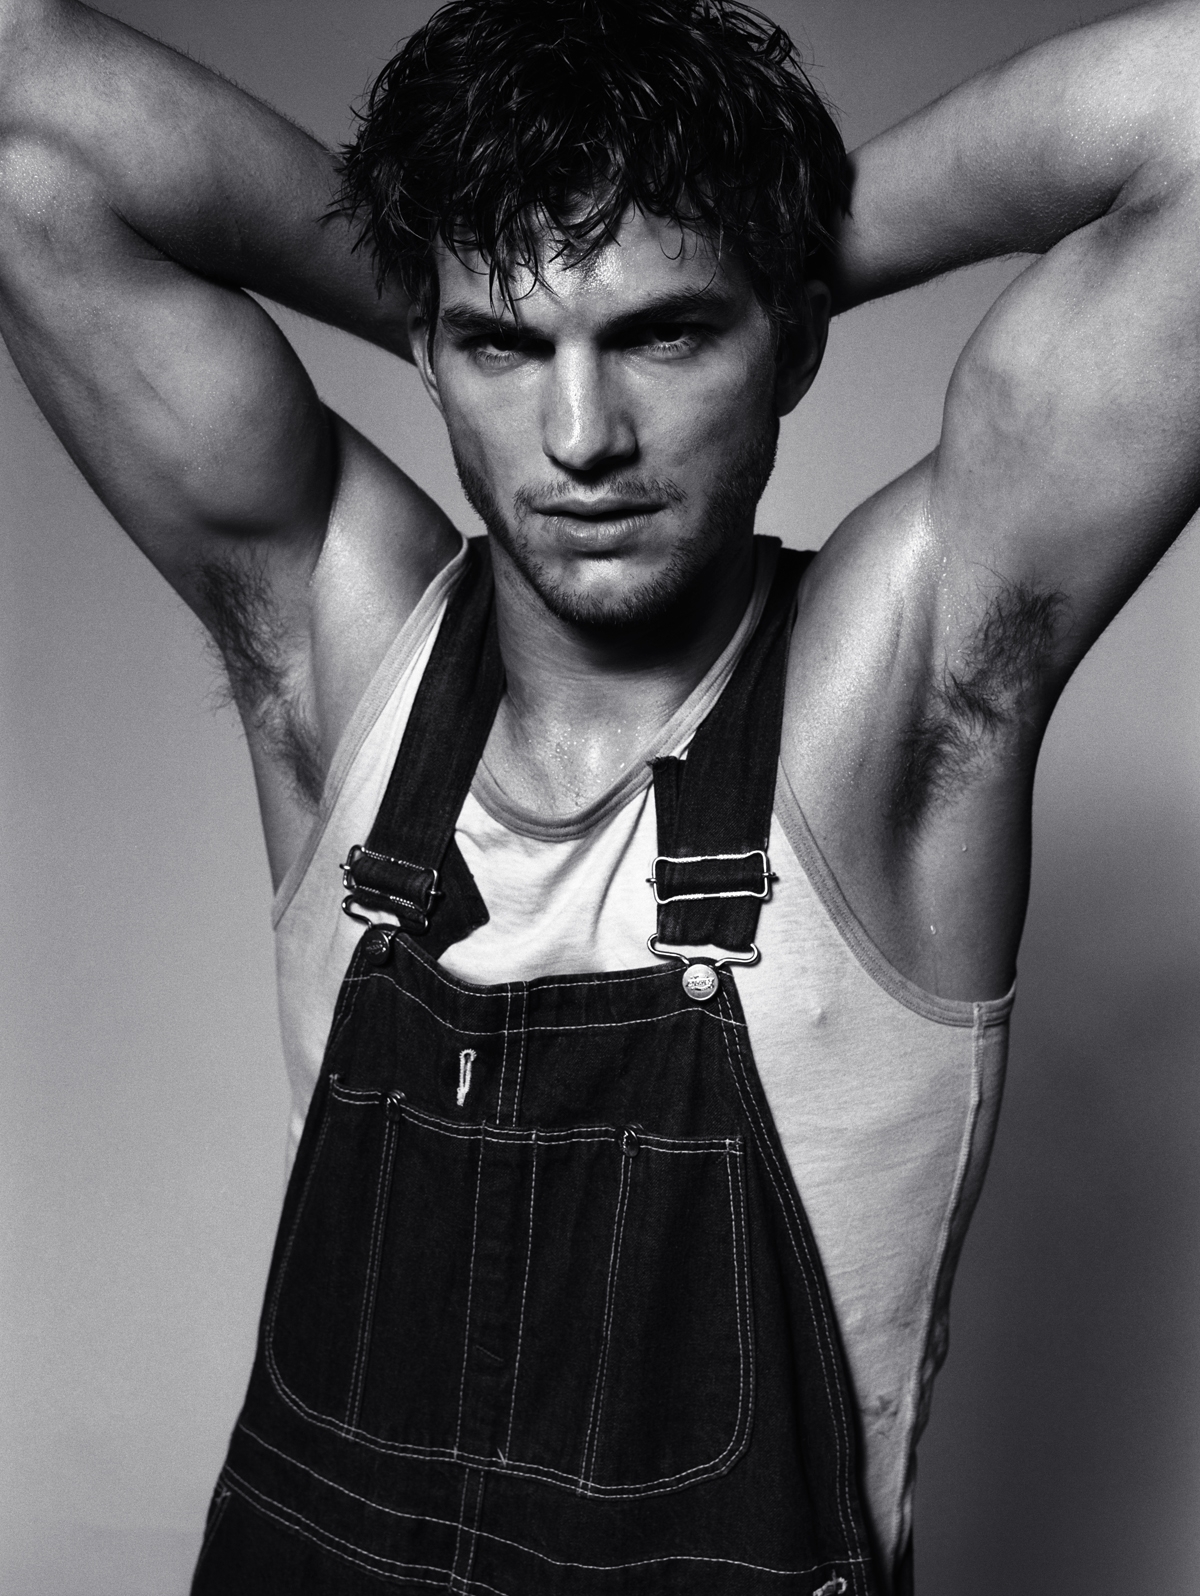 Ashton Kutcher Modeling Photos